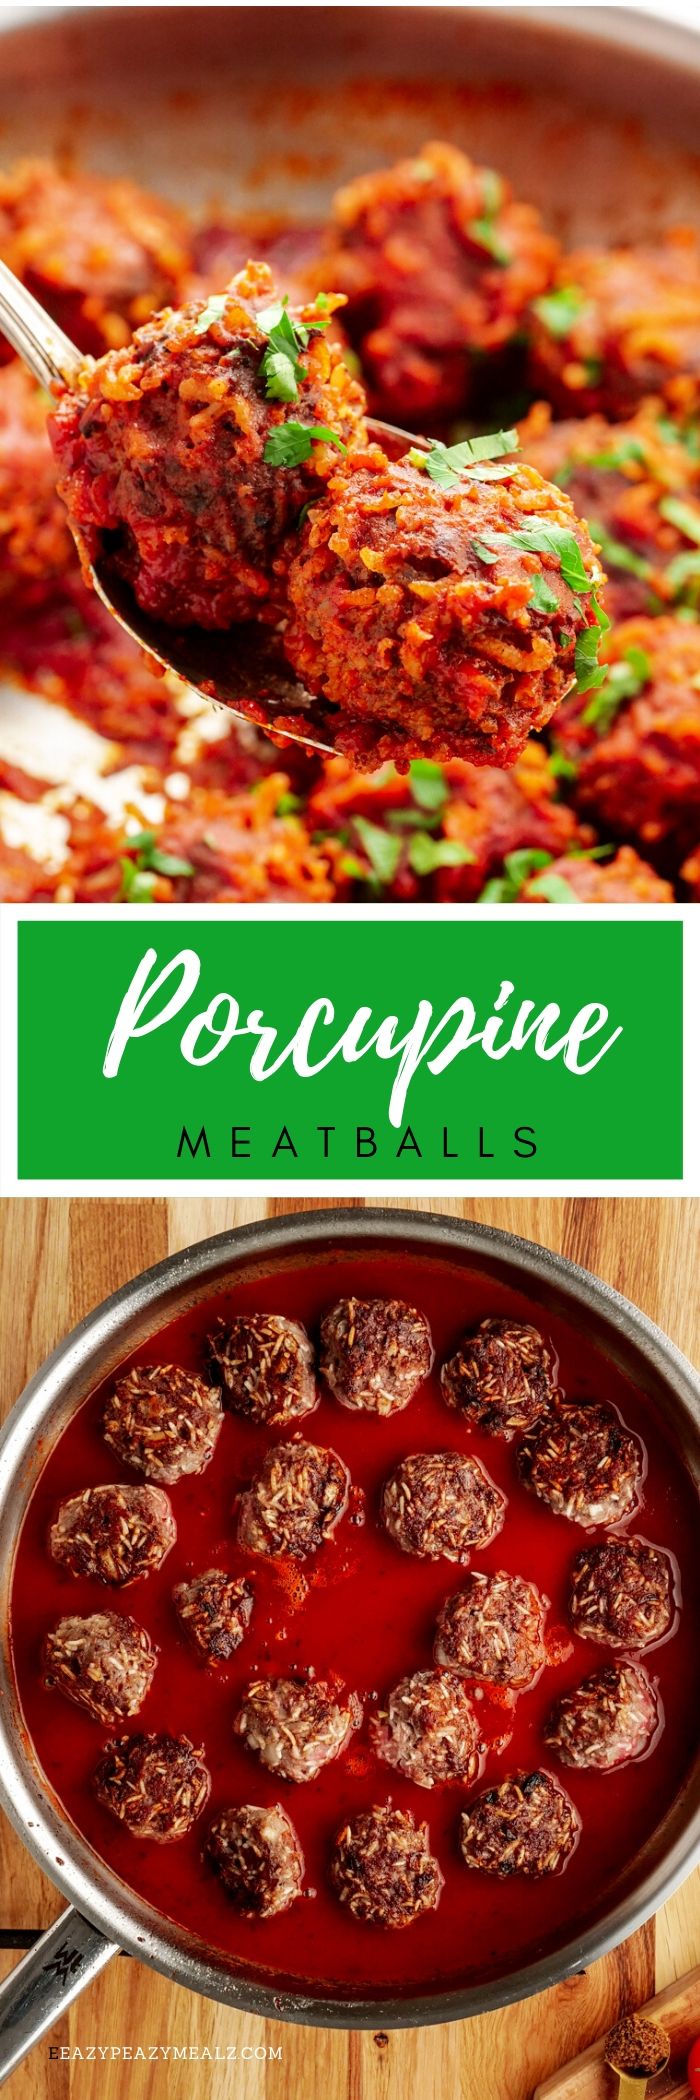 Porcupine meatballs